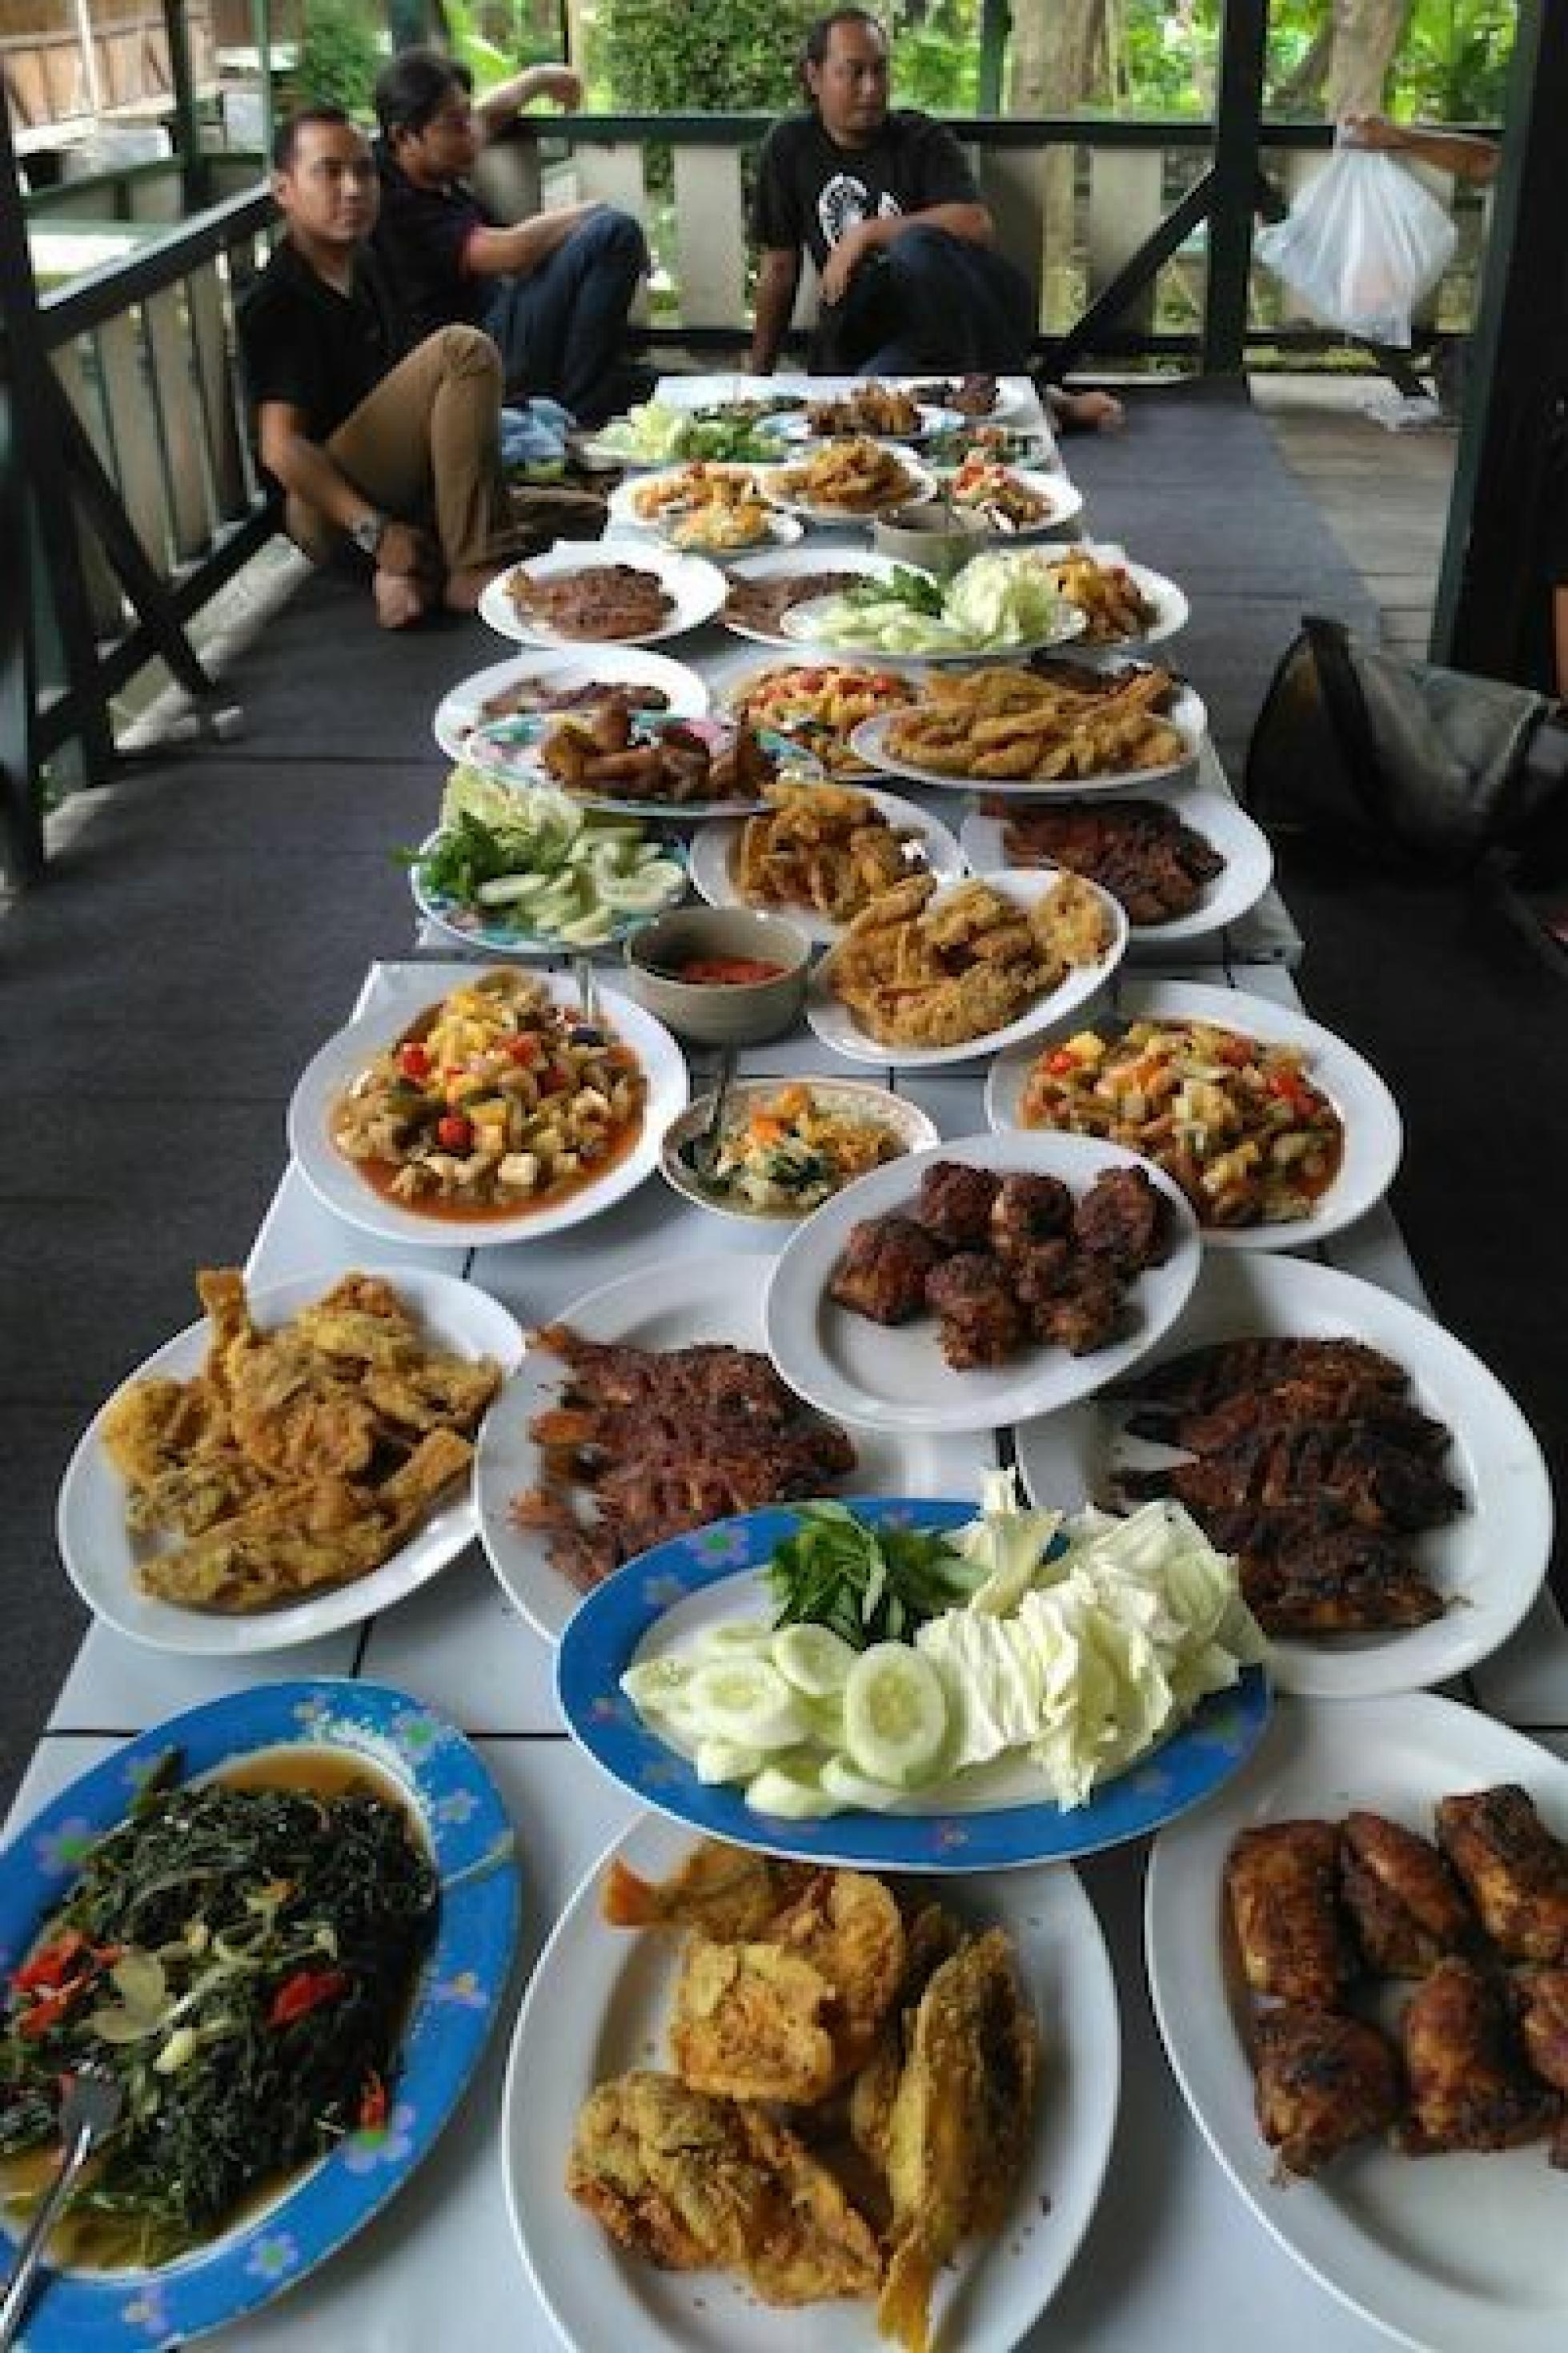 Banyak orang Indonesia yang berbuka puasa di bulan Ramadhan dengan makan bersama.  Sebuah meja panjang ditumpuk dengan piring-piring penuh hidangan berwarna-warni mulai dari sayuran hingga daging panggang dan goreng hingga keju.